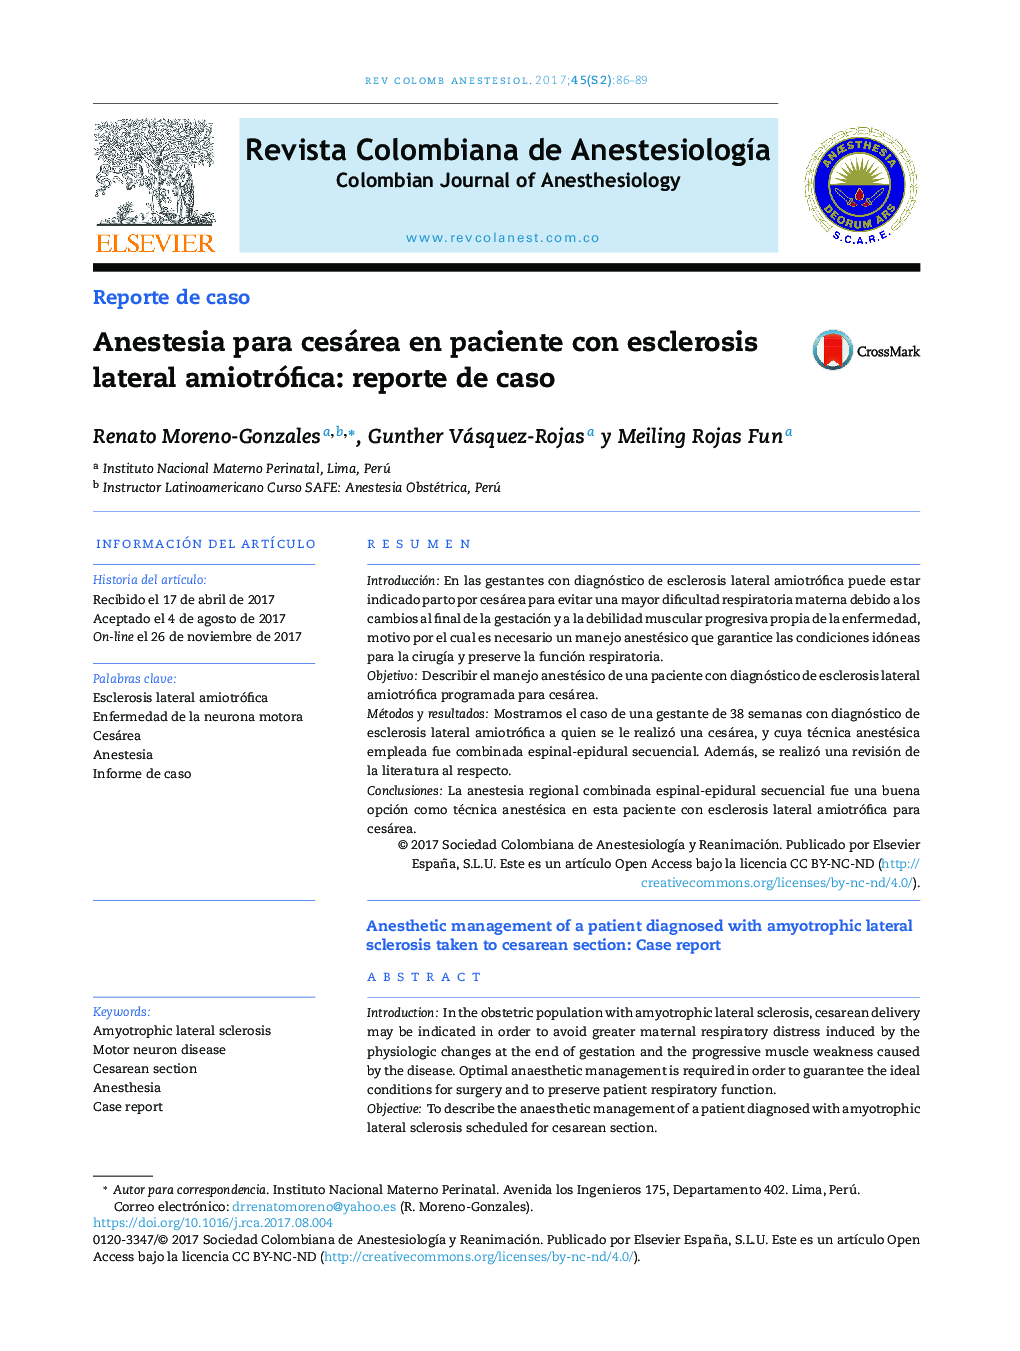 Anestesia para cesárea en paciente con esclerosis lateral amiotrófica: reporte de caso